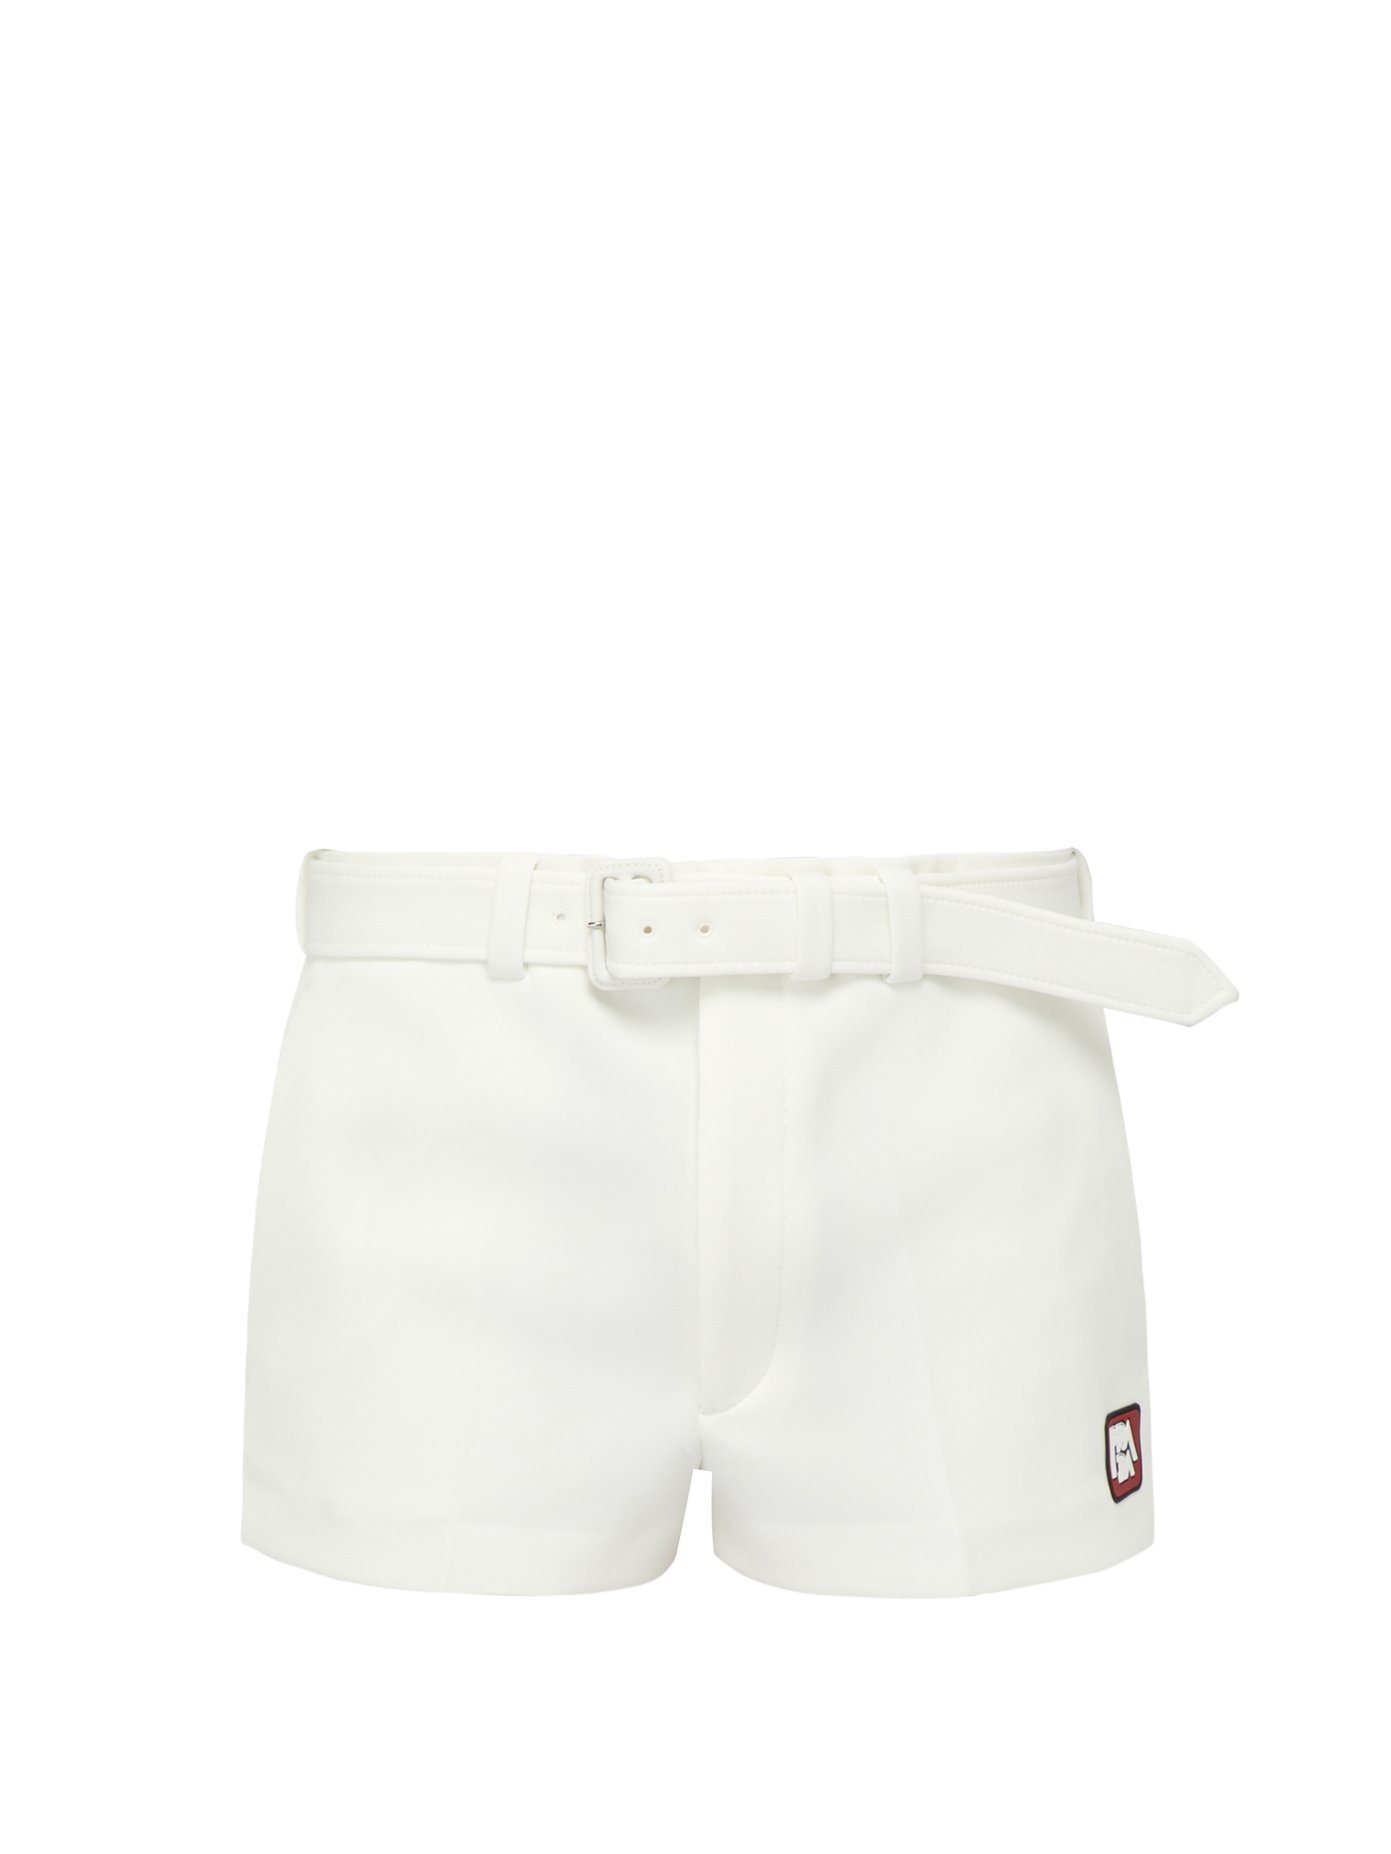 prada boxer shorts